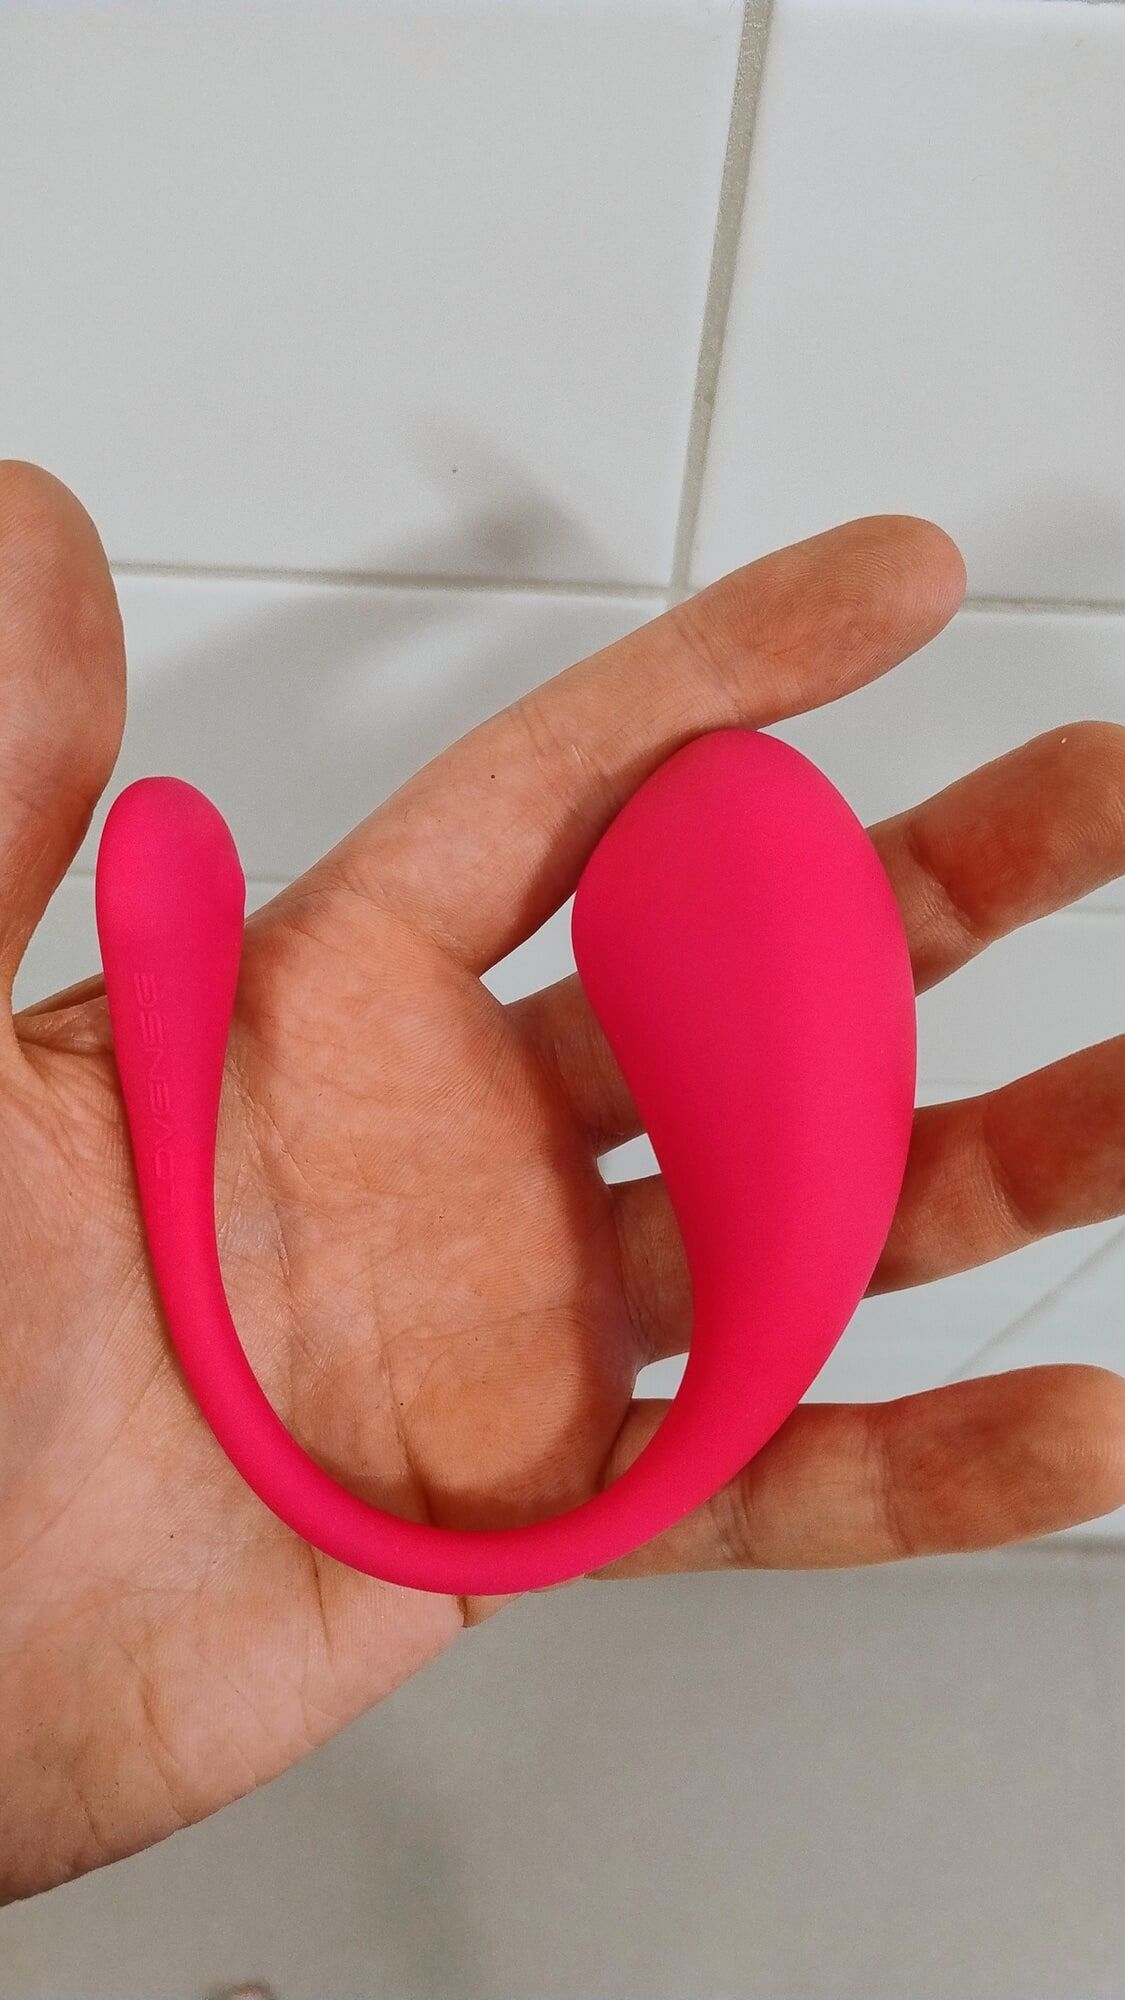 Lush 3 my new sex toy #Lush3 #lovense #3